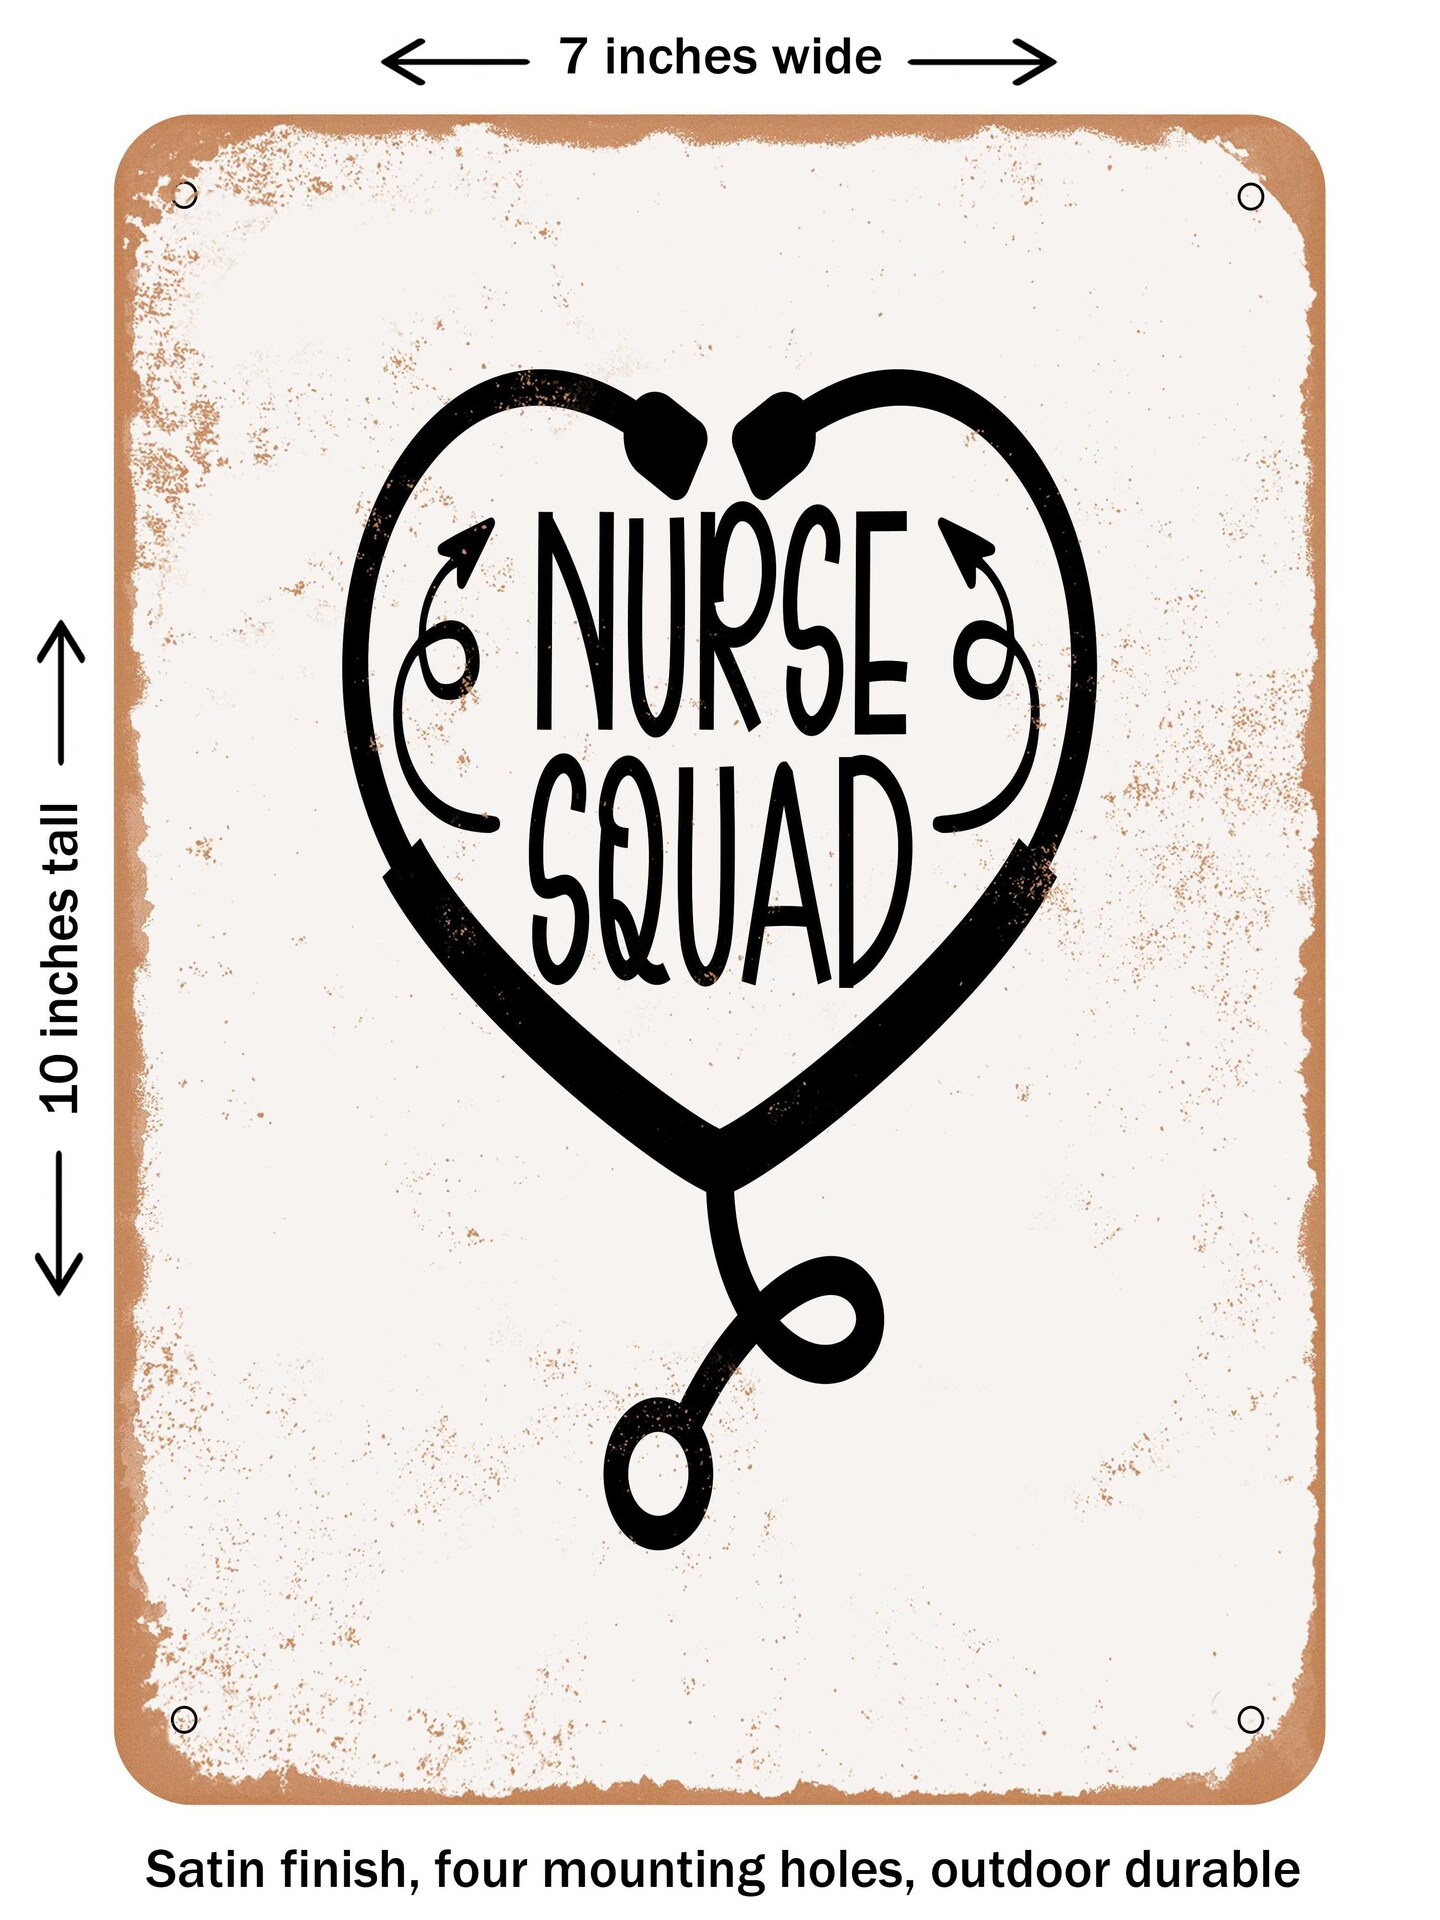 DECORATIVE METAL SIGN - Nurse squad - 9  - Vintage Rusty Look